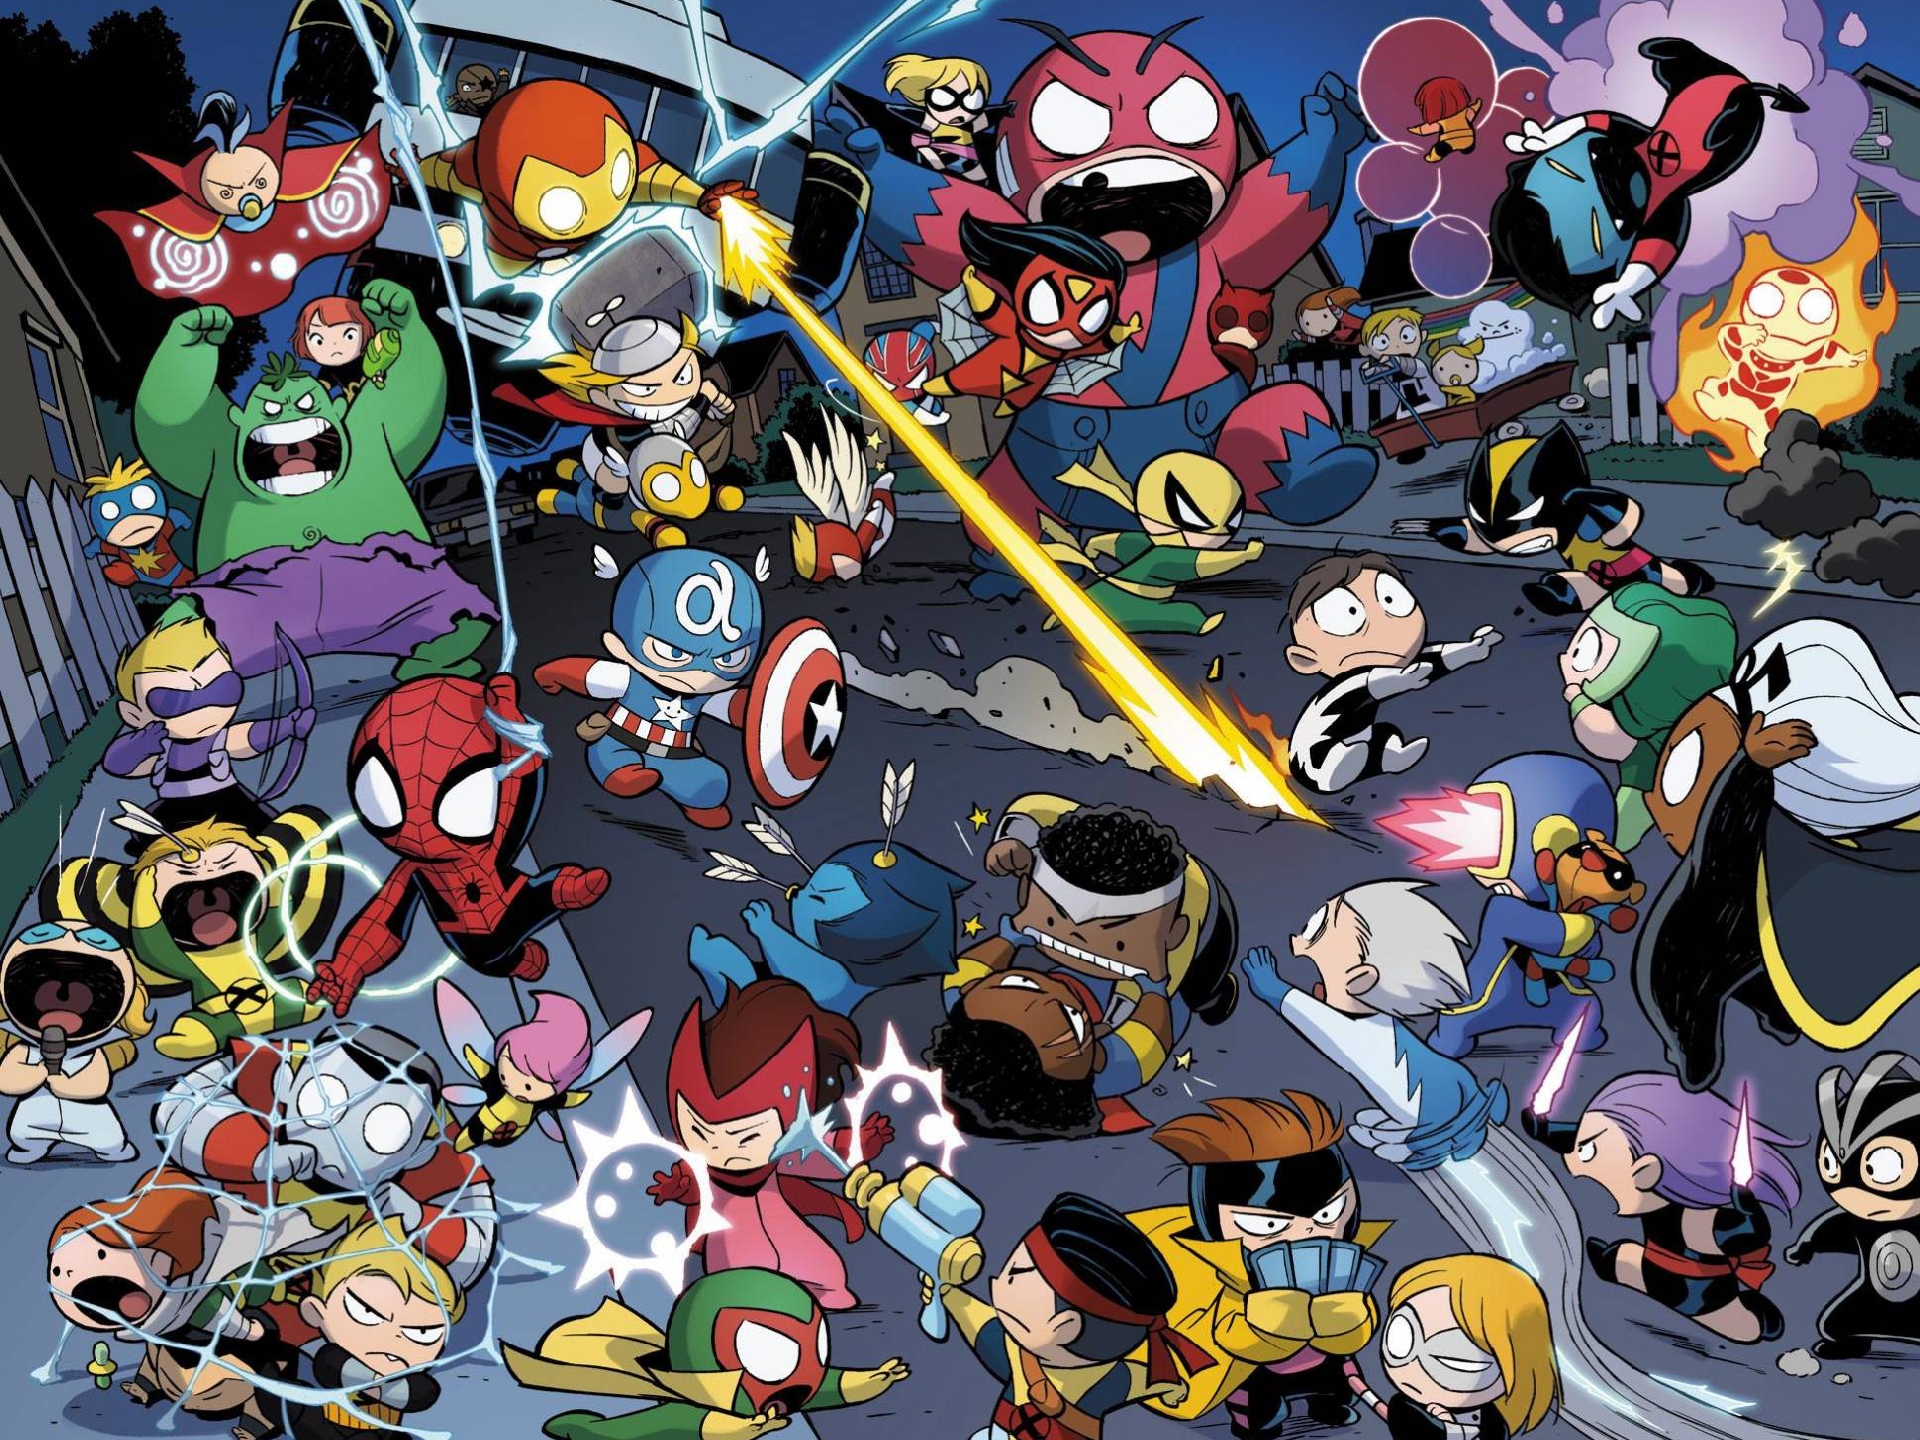 hulk, vision (marvel comics), colossus, quicksilver (marvel comics), comics, avengers vs x men babies, angel (marvel comics), avengers, banshee (marvel comics), beast (marvel comics), bishop (marvel comics), black widow, captain america, carol danvers, cyclops (marvel comics), dazzler (marvel comics), gambit (marvel comics), giant man, havok (marvel comics), hawkeye, hope summers, human torch (marvel comics), iron fist (marvel comics), iron man, longshot (marvel comics), luke cage, ms marvel, namor the sub mariner, nick fury, nightcrawler (marvel comics), pixie (marvel comics), polaris (marvel comics), power pack, psylocke (marvel comics), scarlet witch, spider man, spider woman, storm (marvel comics), wasp (marvel comics), wolverine, x men